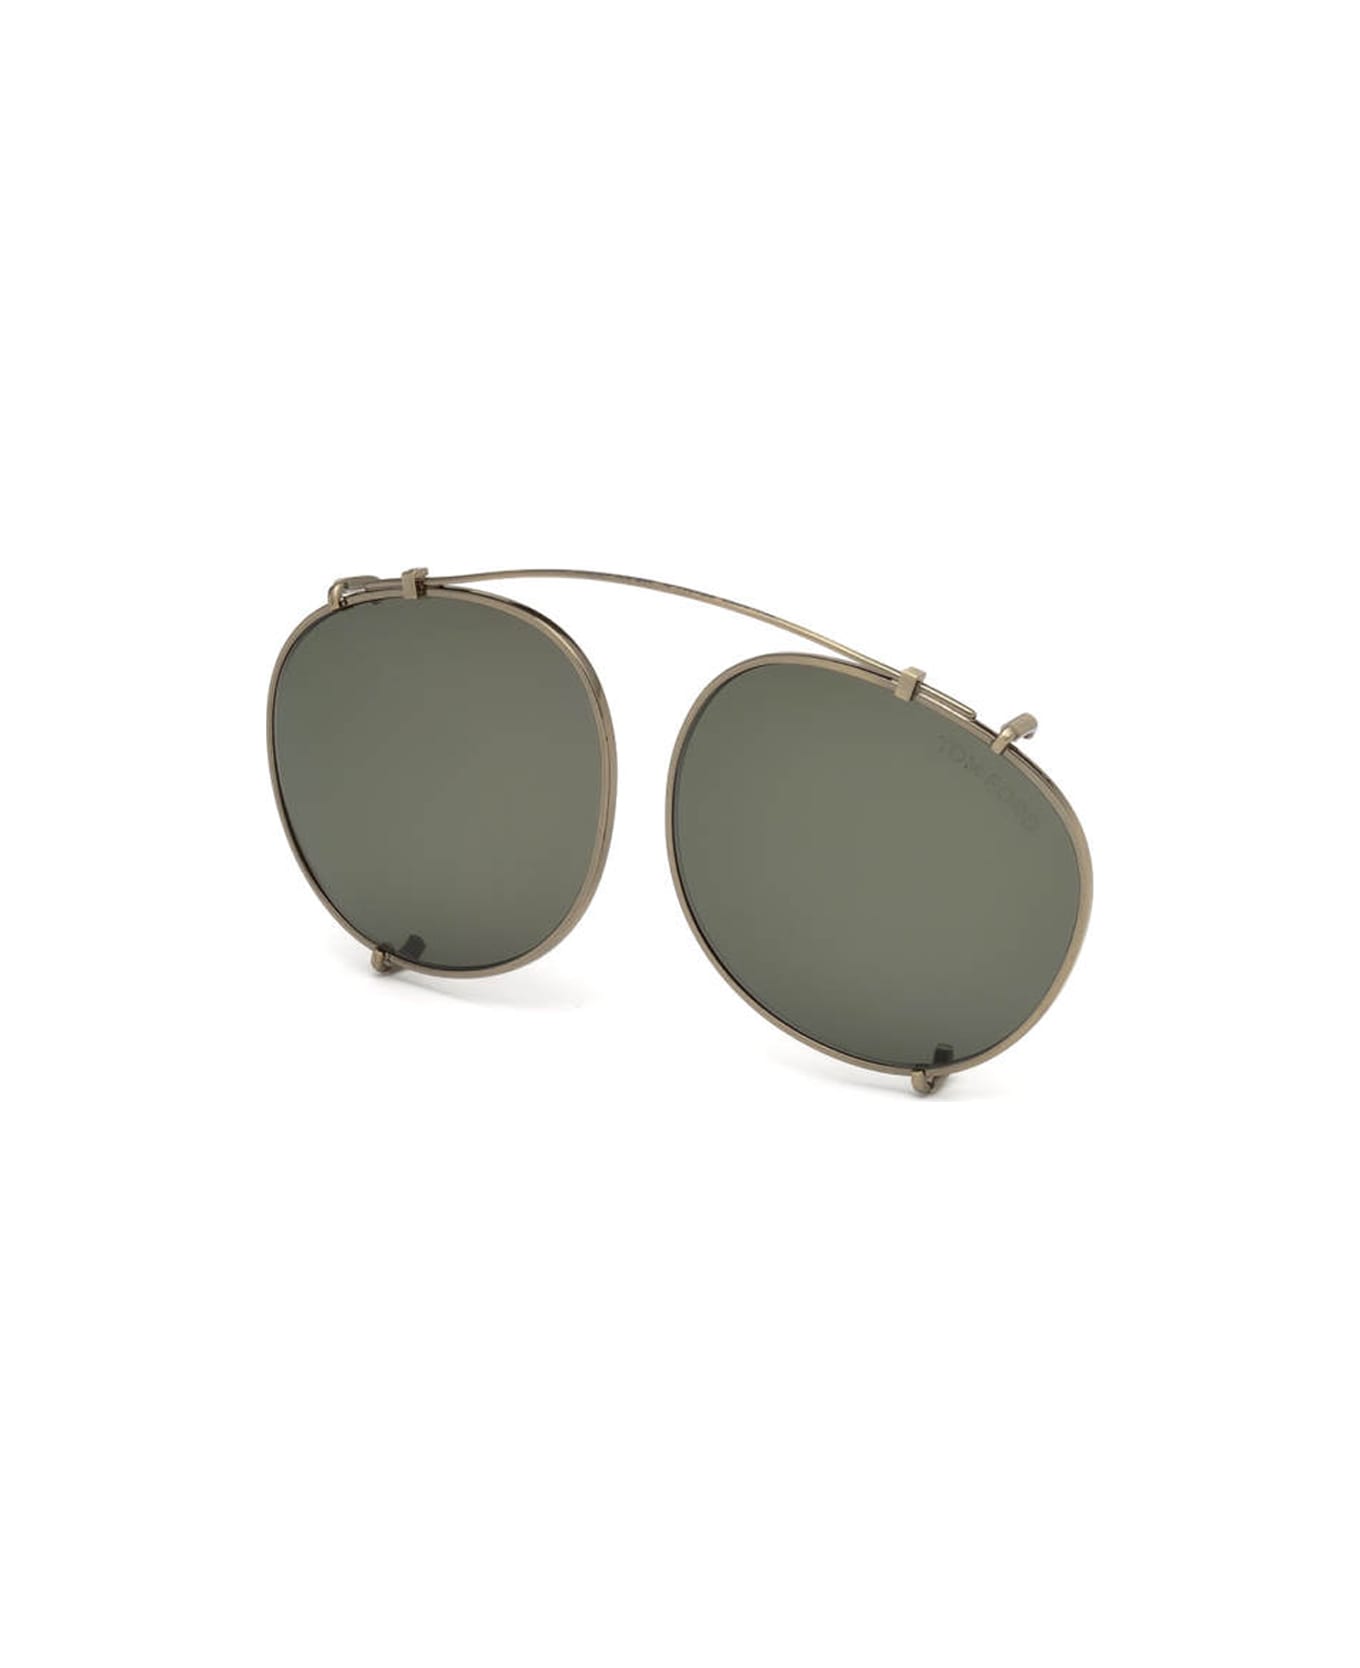 Tom Ford Eyewear Ft5294 Sunglasses - Argento